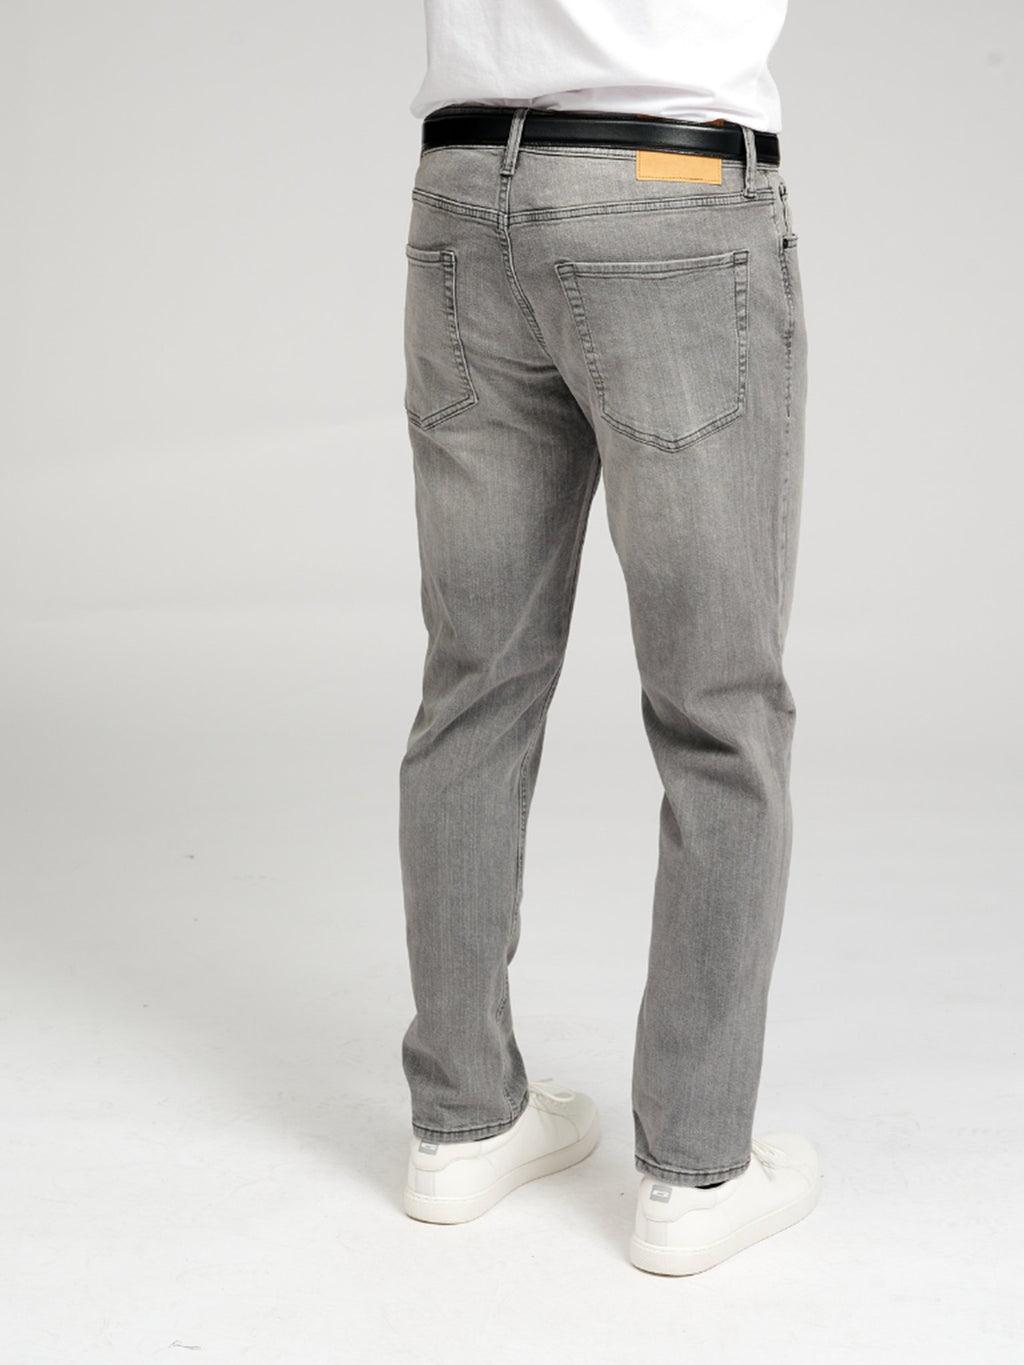 The Original Performance Jeans (rialta) - denim liath